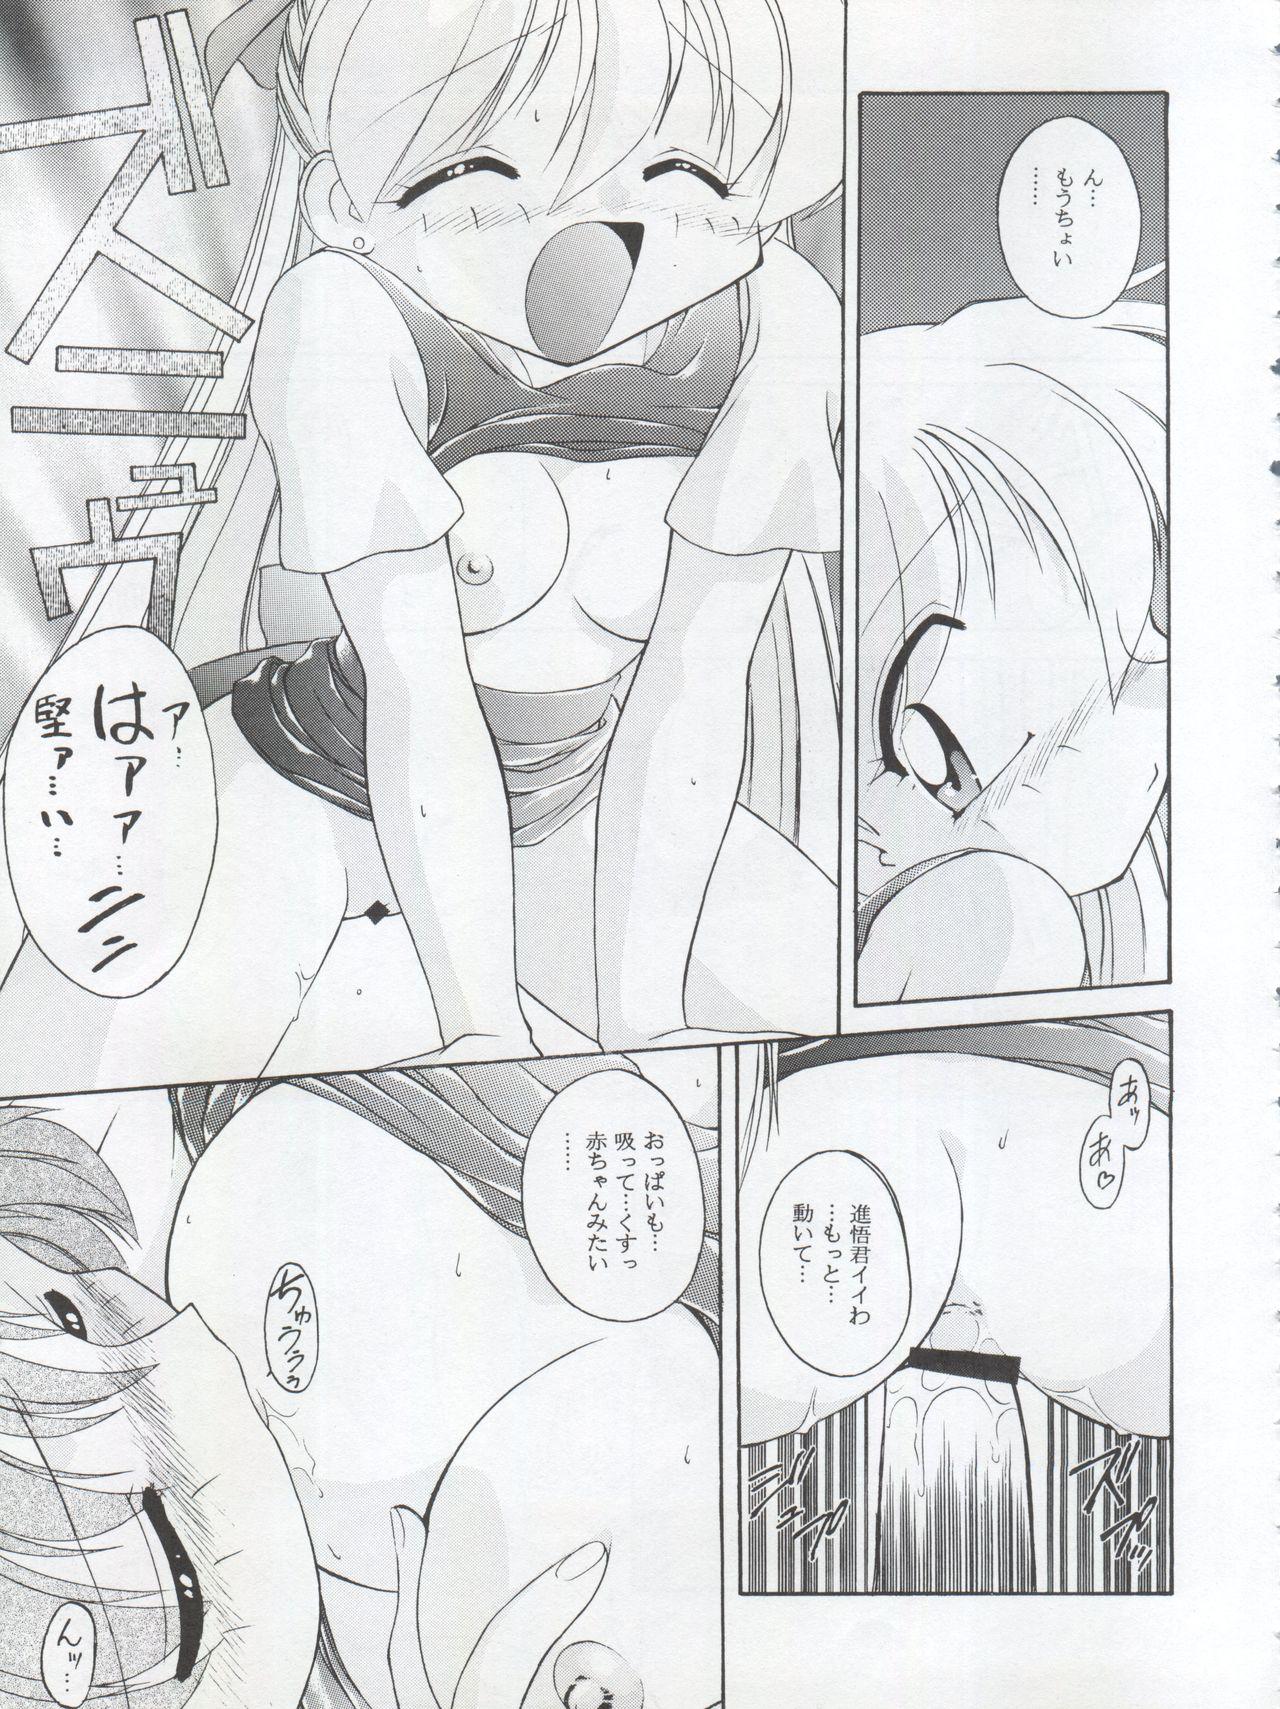 Bondagesex HABER 8 - Sailor moon Cavalgando - Page 11